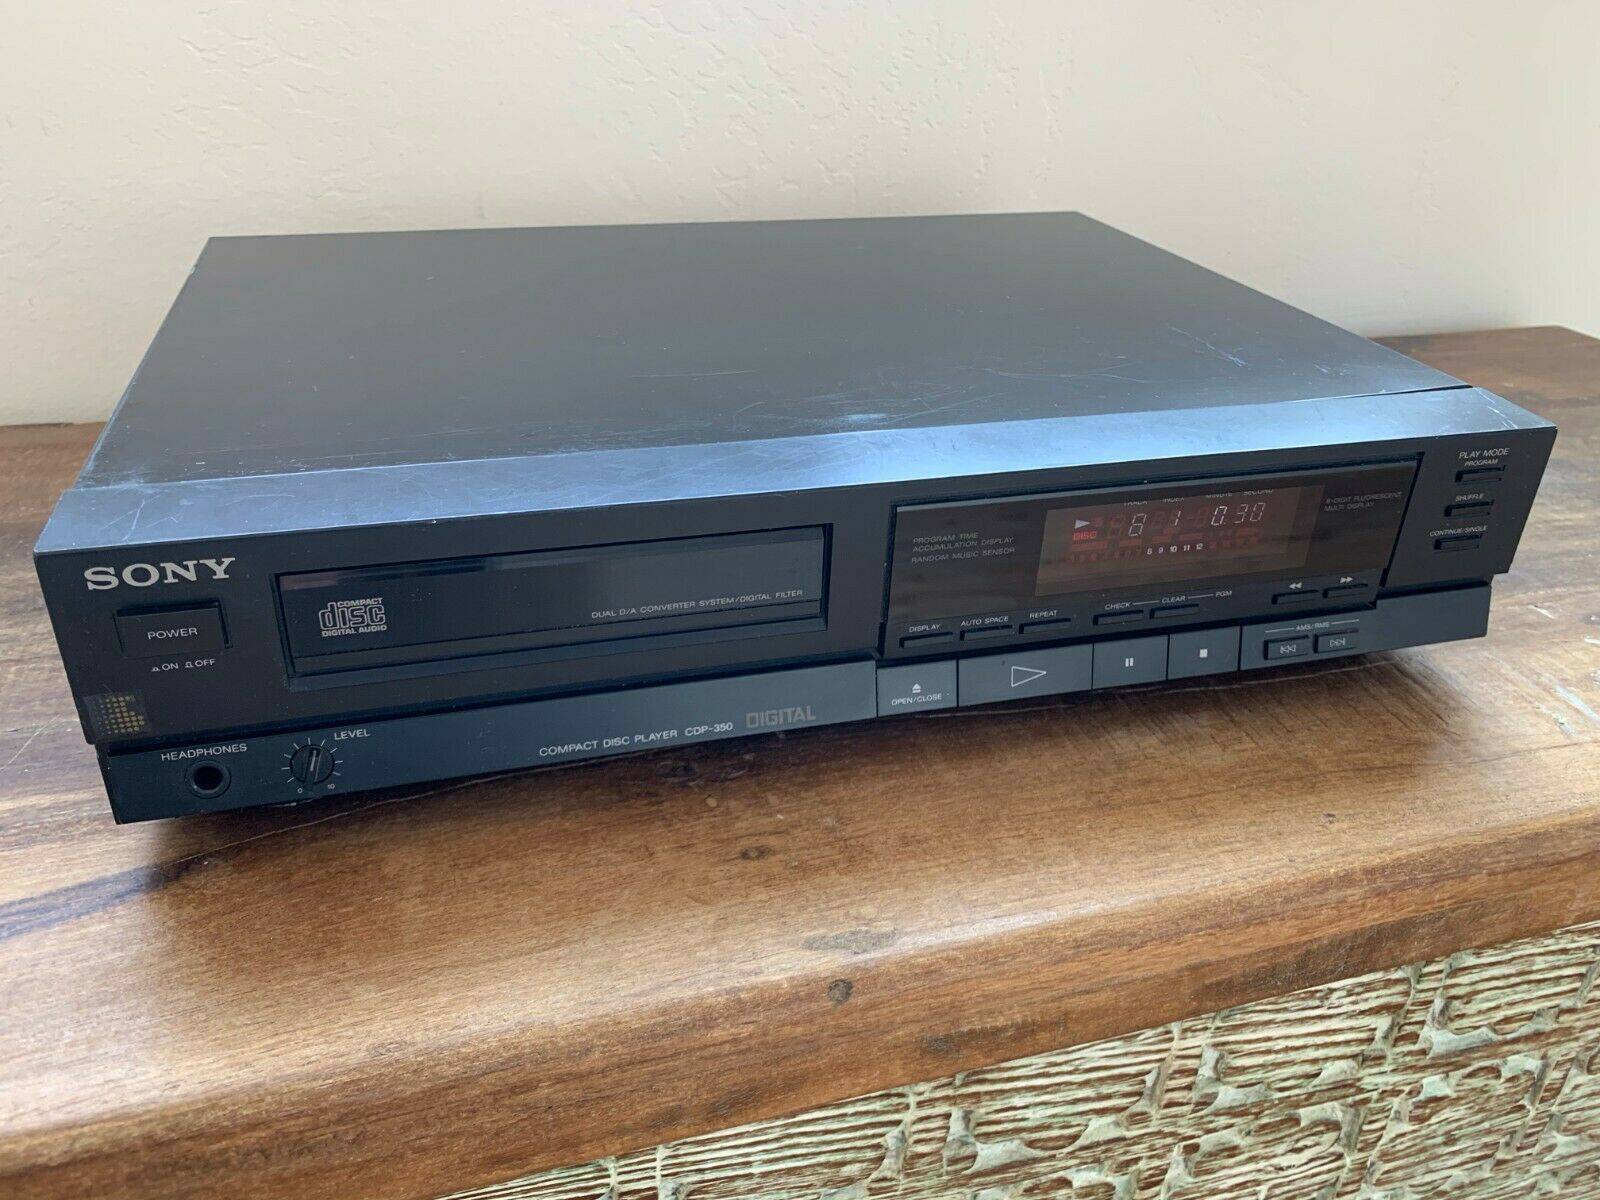 Sony CDP-350